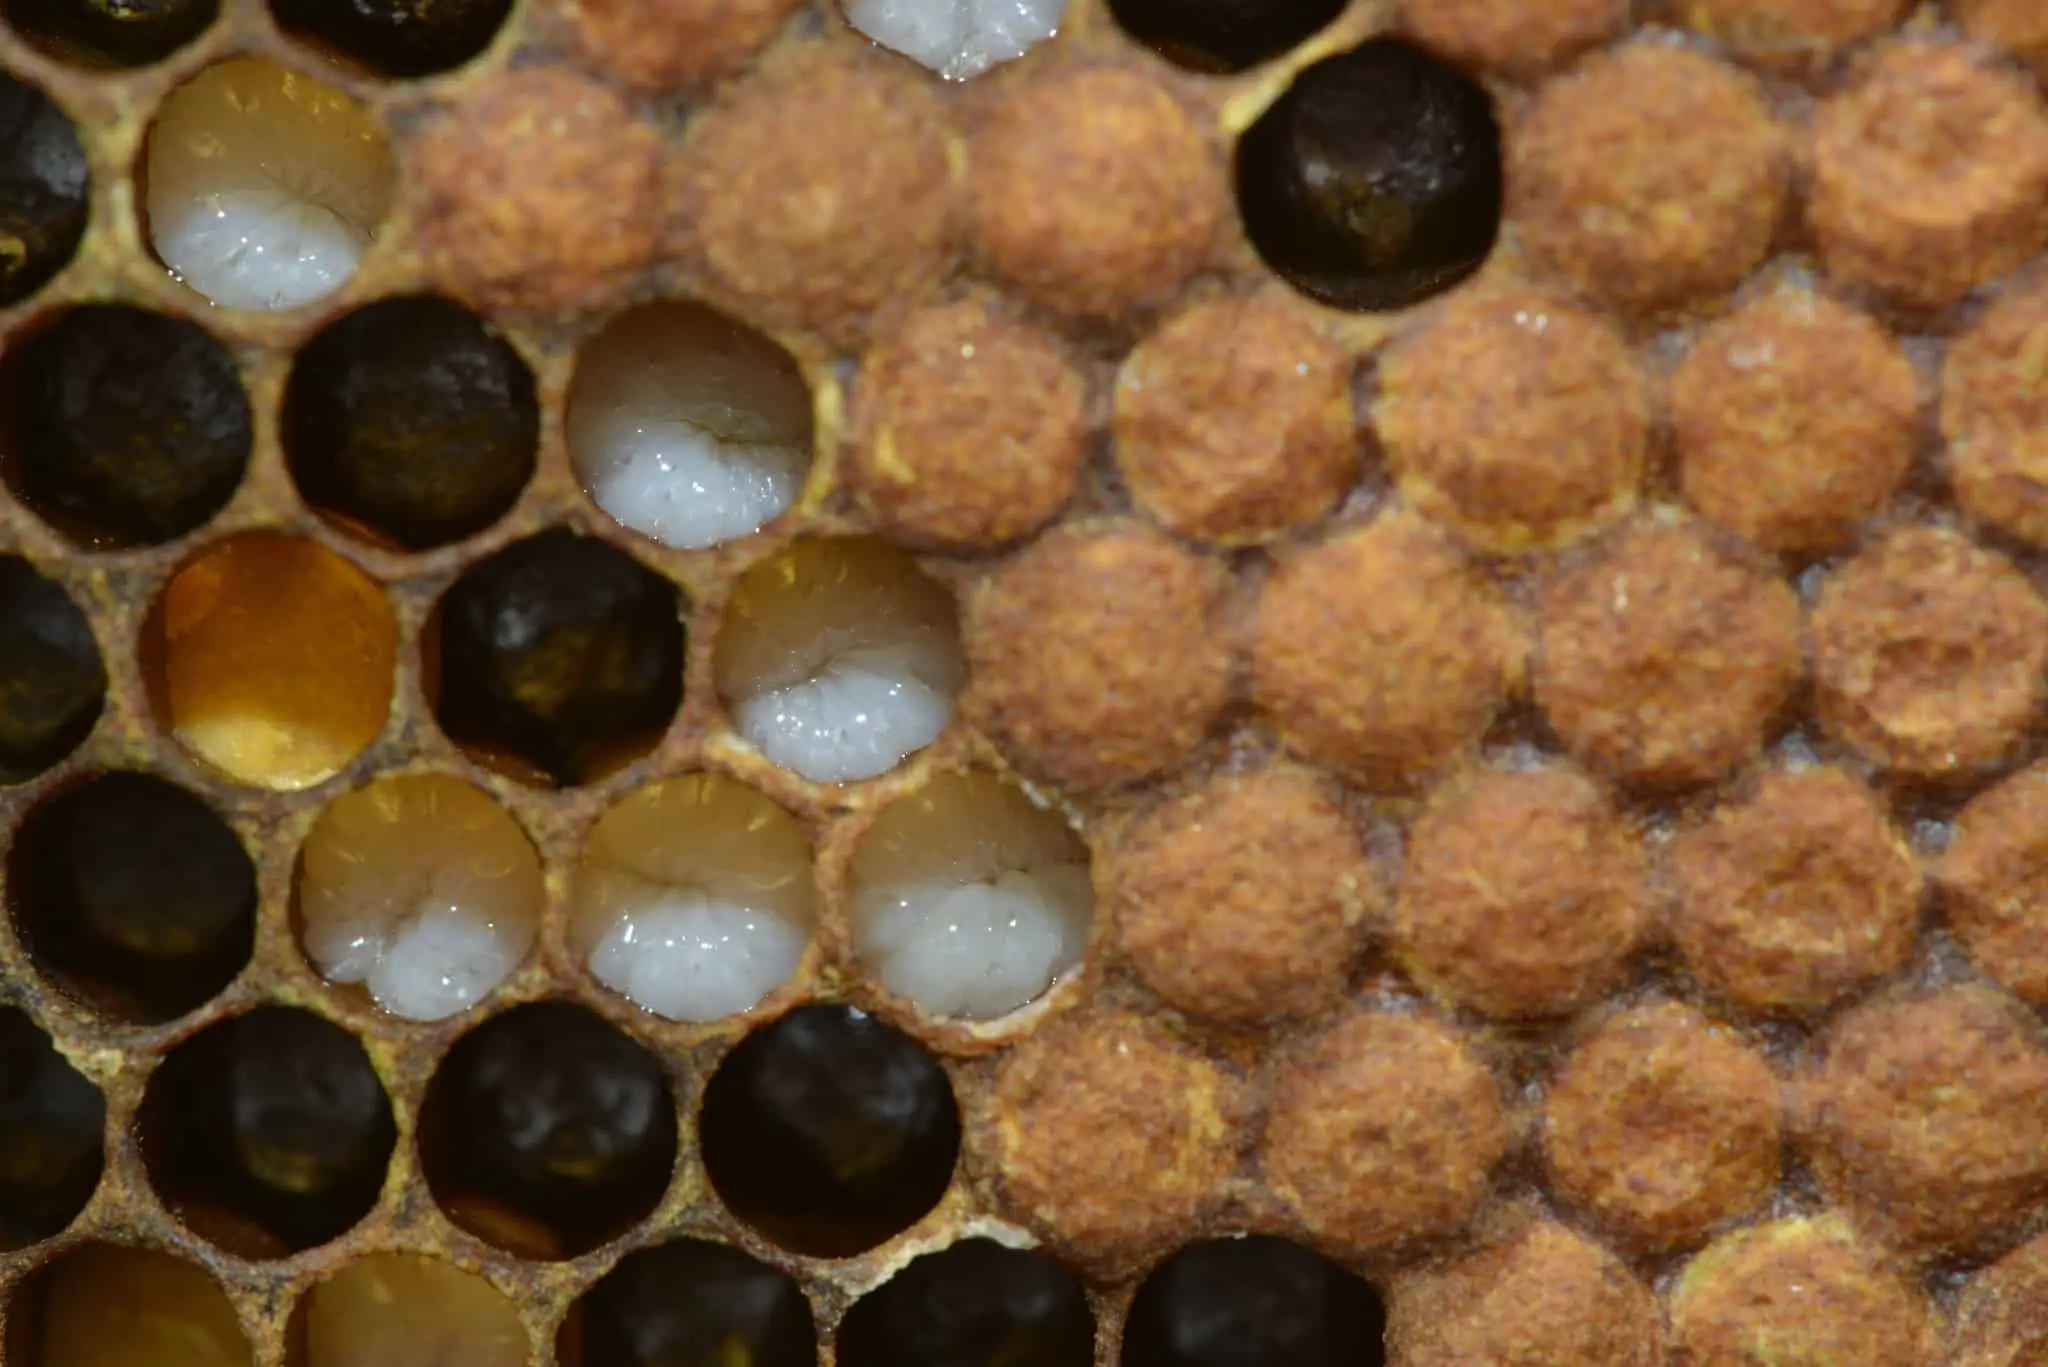 Beehive frame